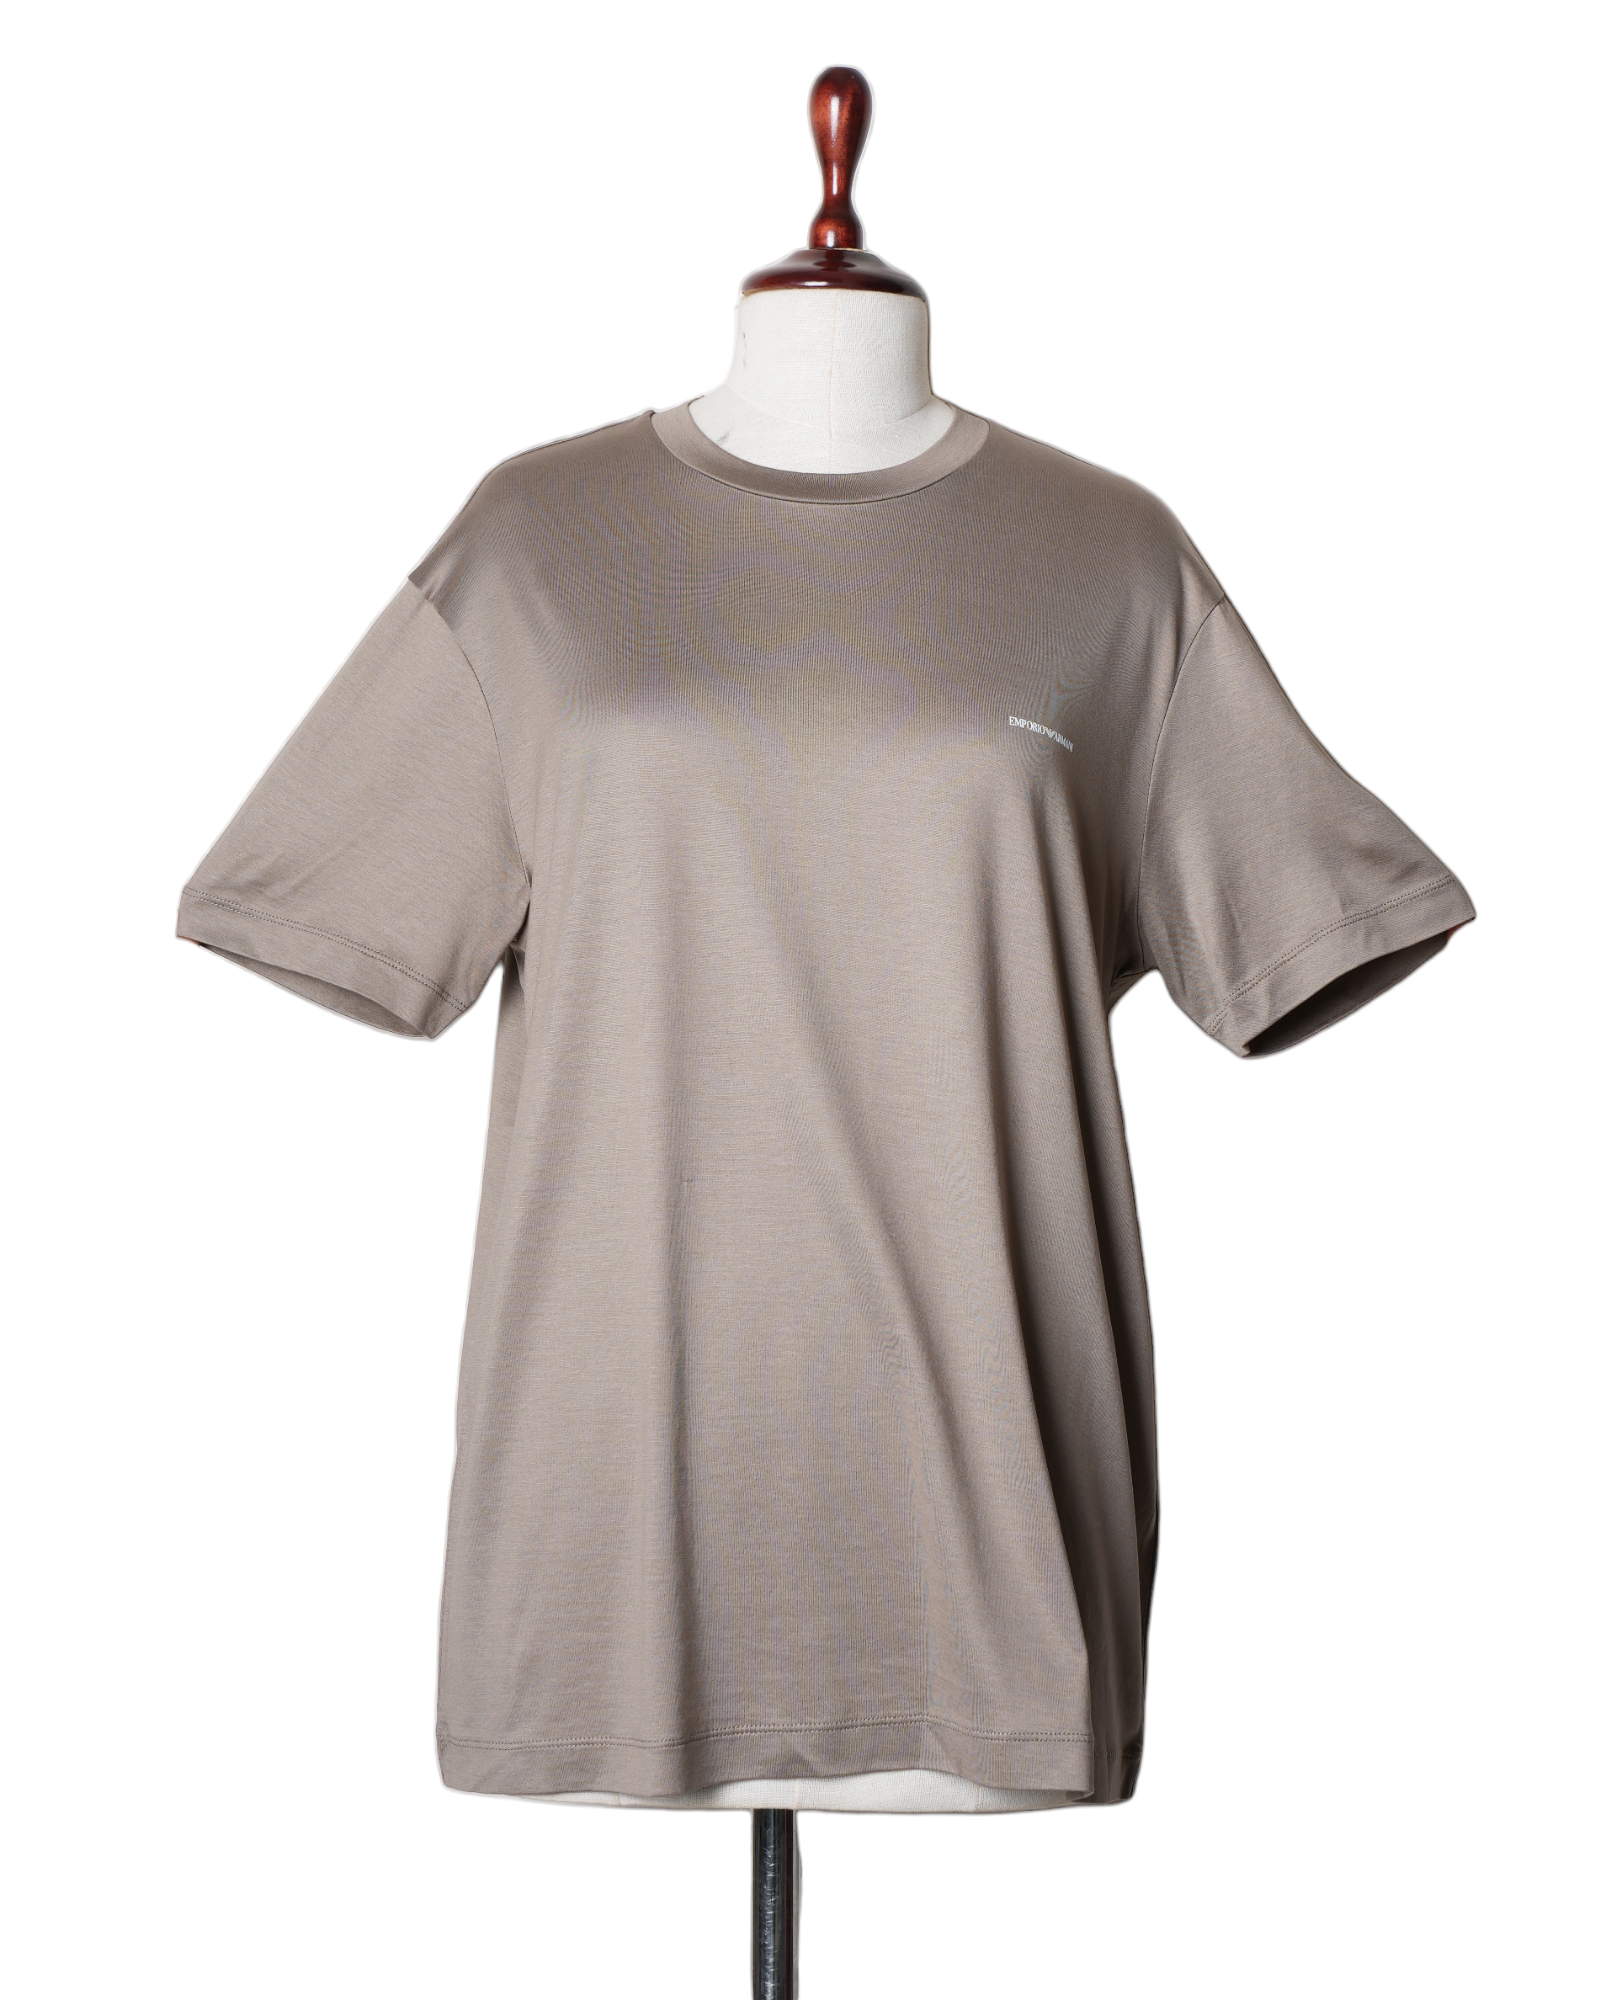 Emporio Armani Grey T-Shirt